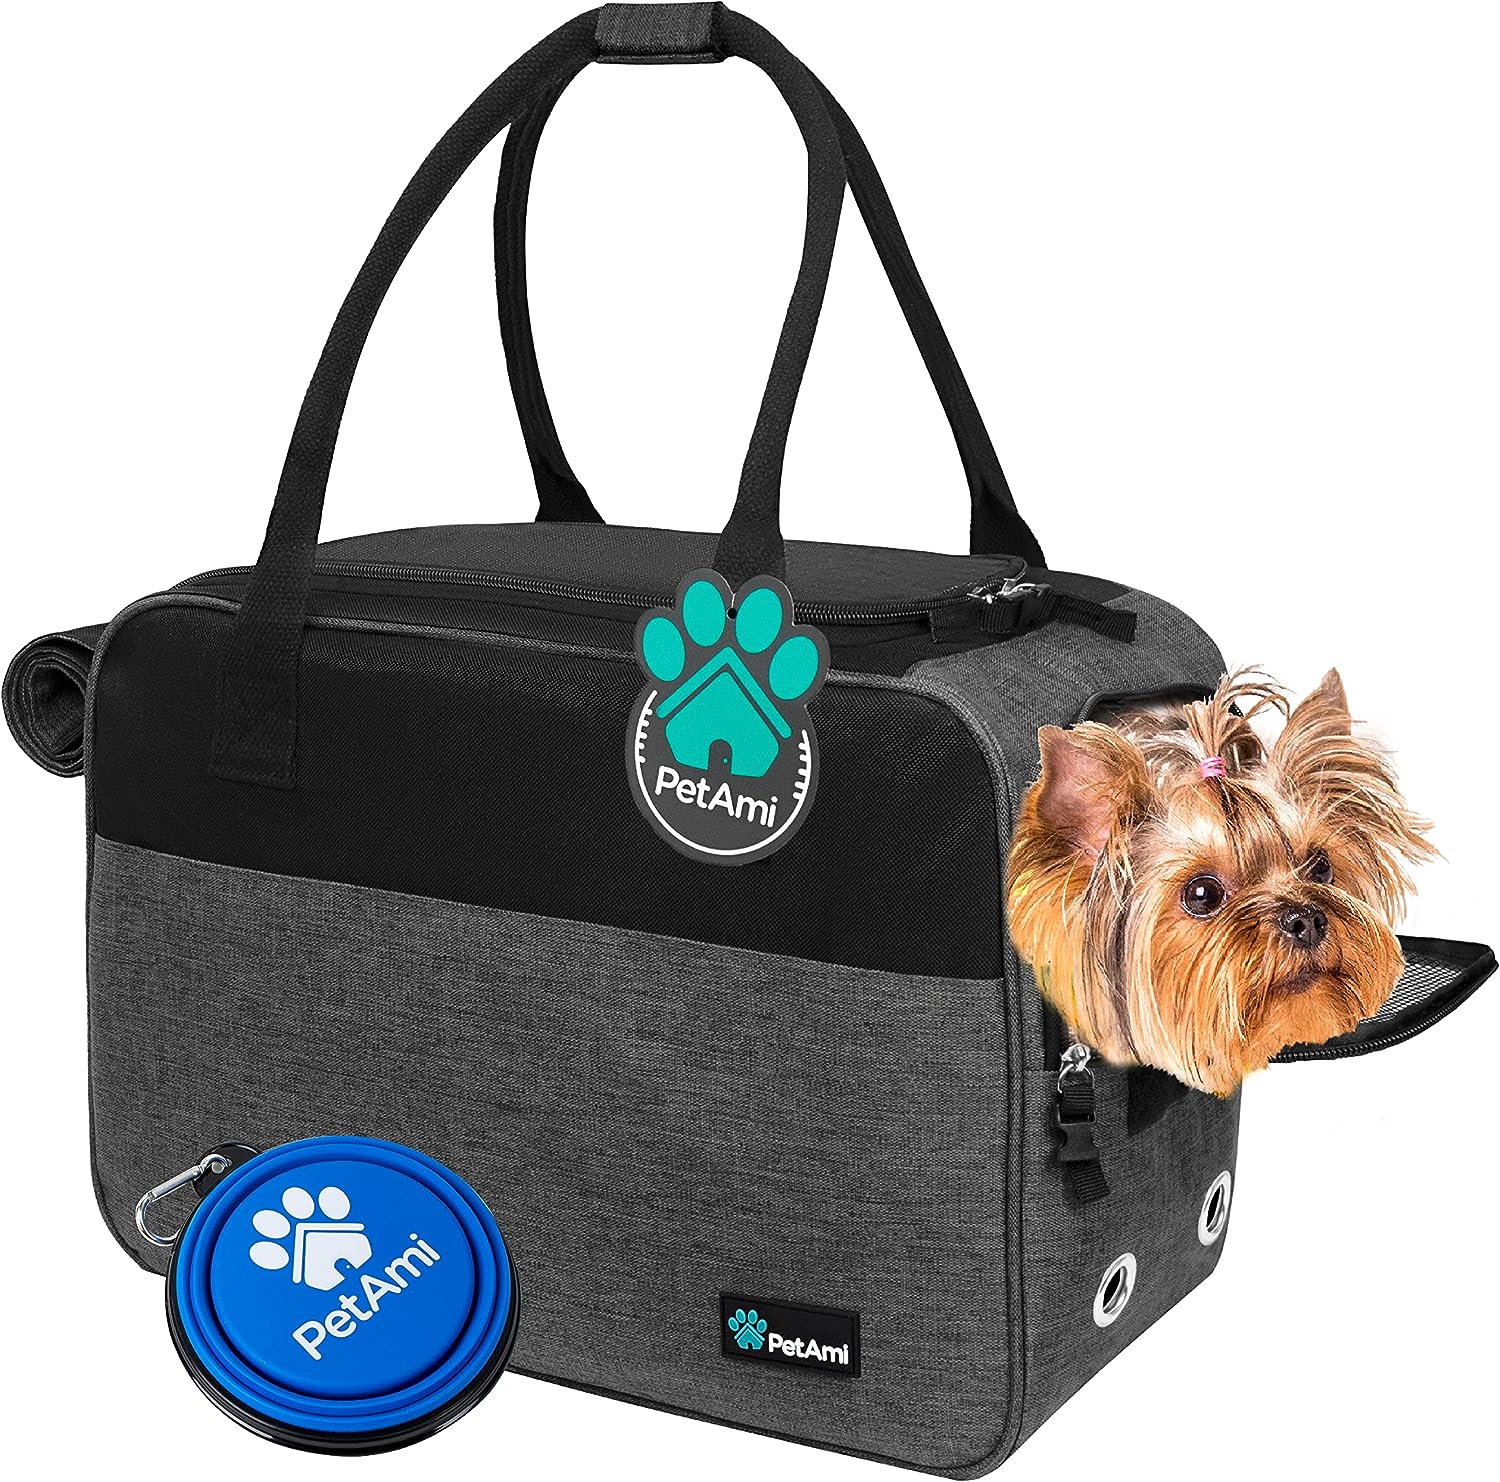 PetAmi Dog Purse Carrier voor kleine honden